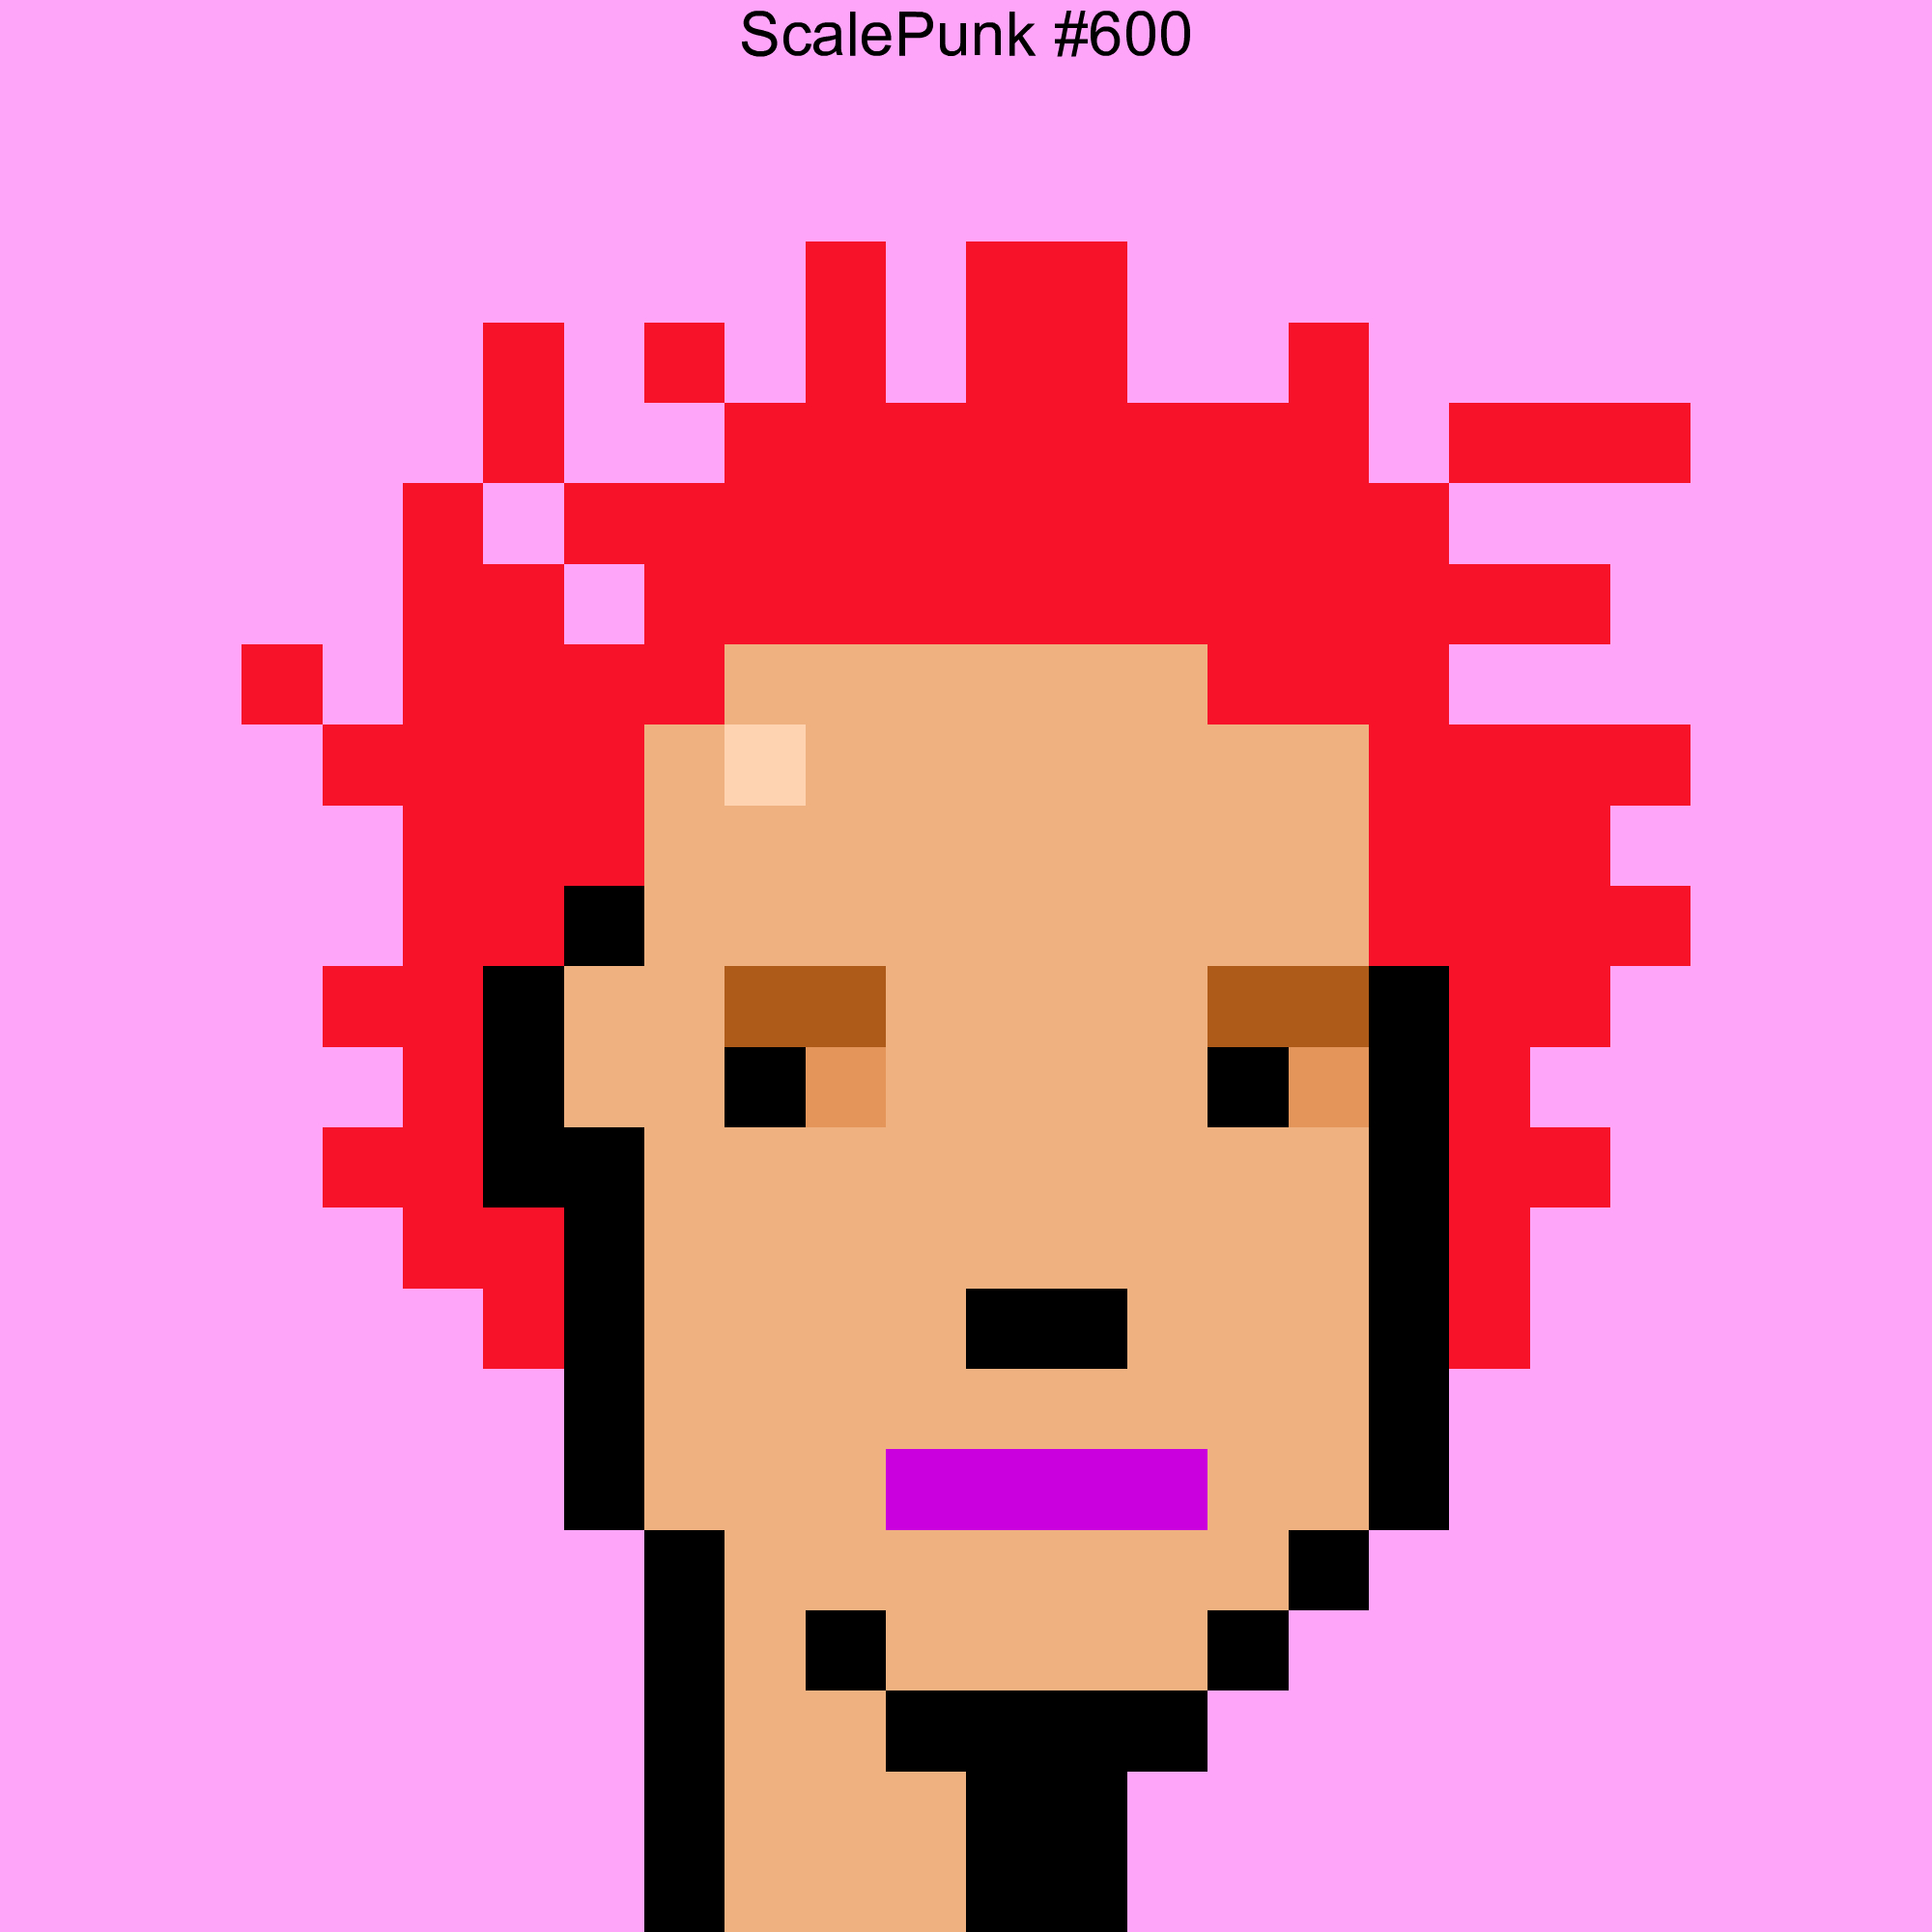 Punk 600